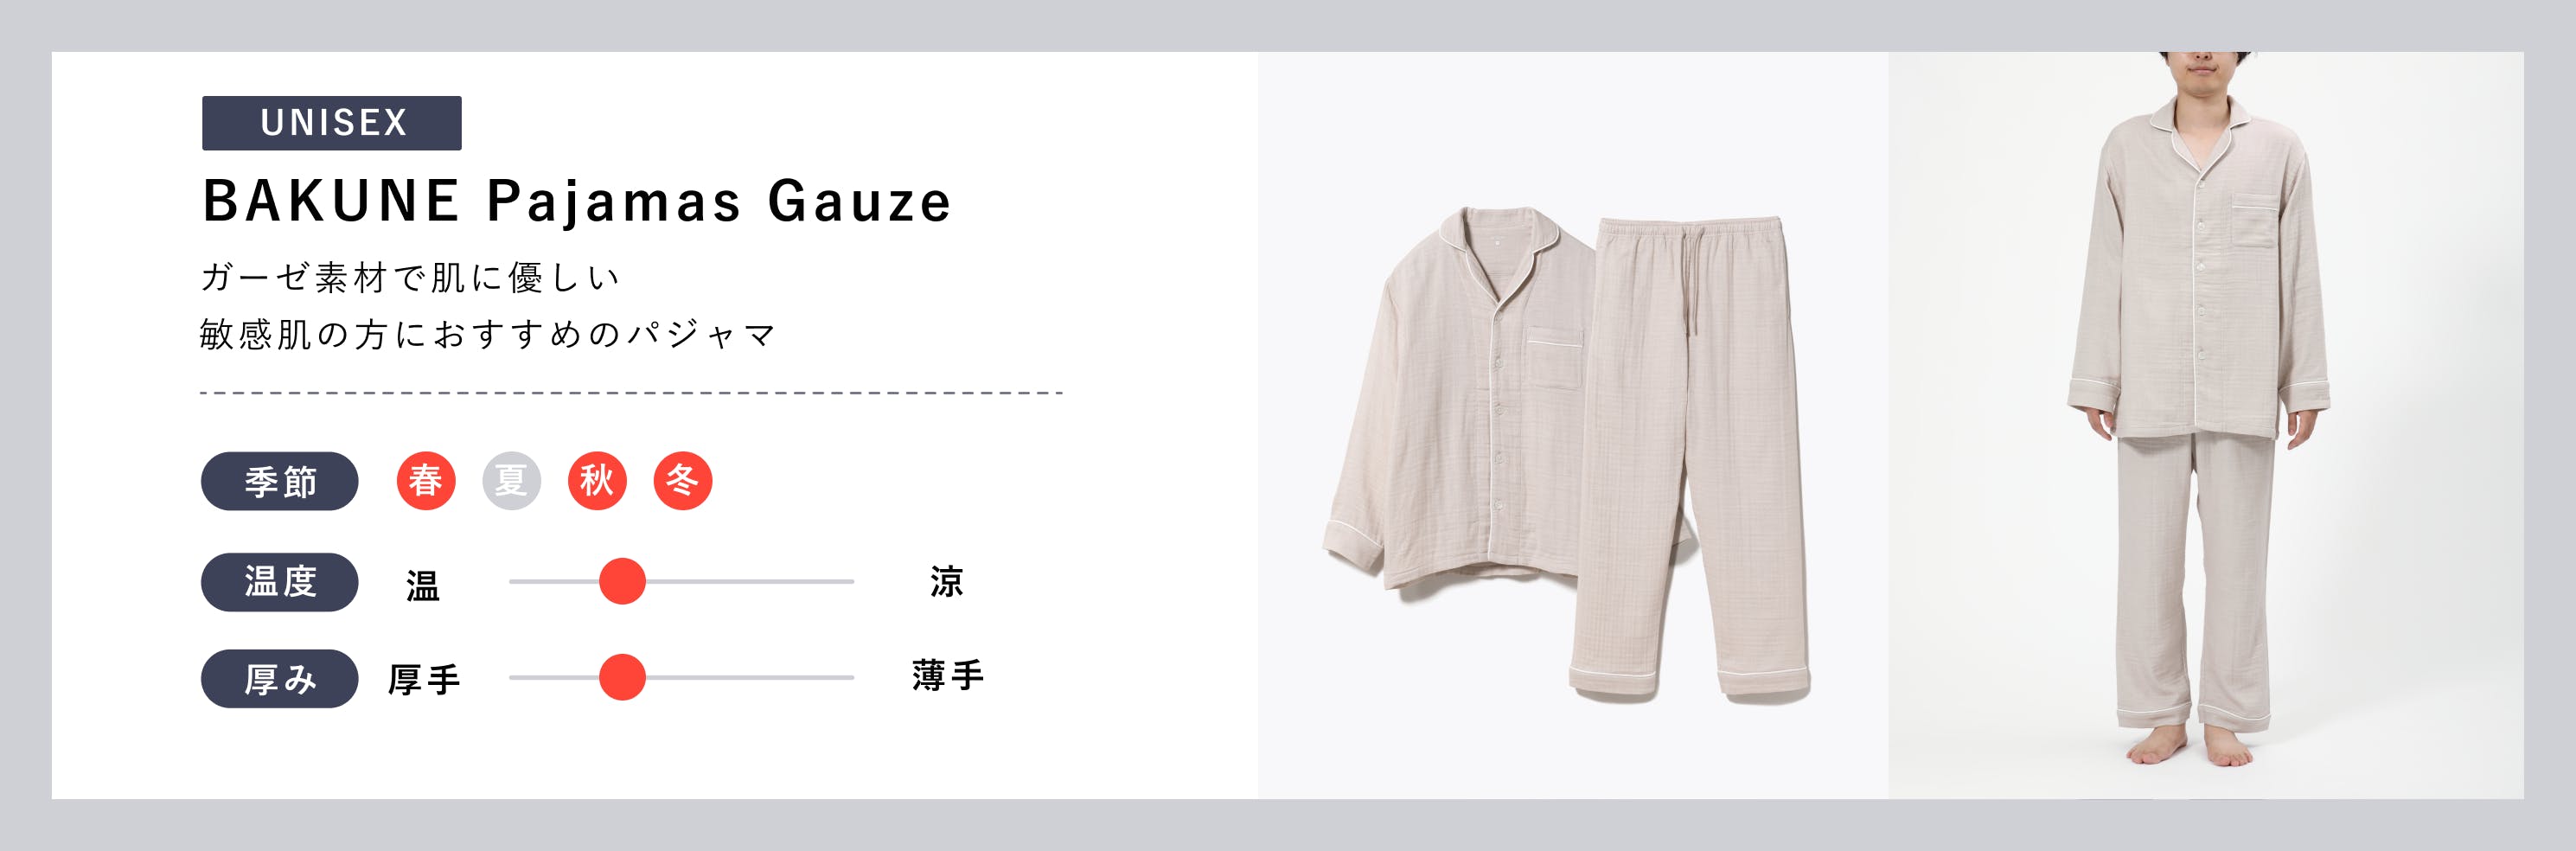 【BAKUNE Pajamas Gauze】ガーゼ素材で肌に優しい敏感肌の方におすすめのパジャマ